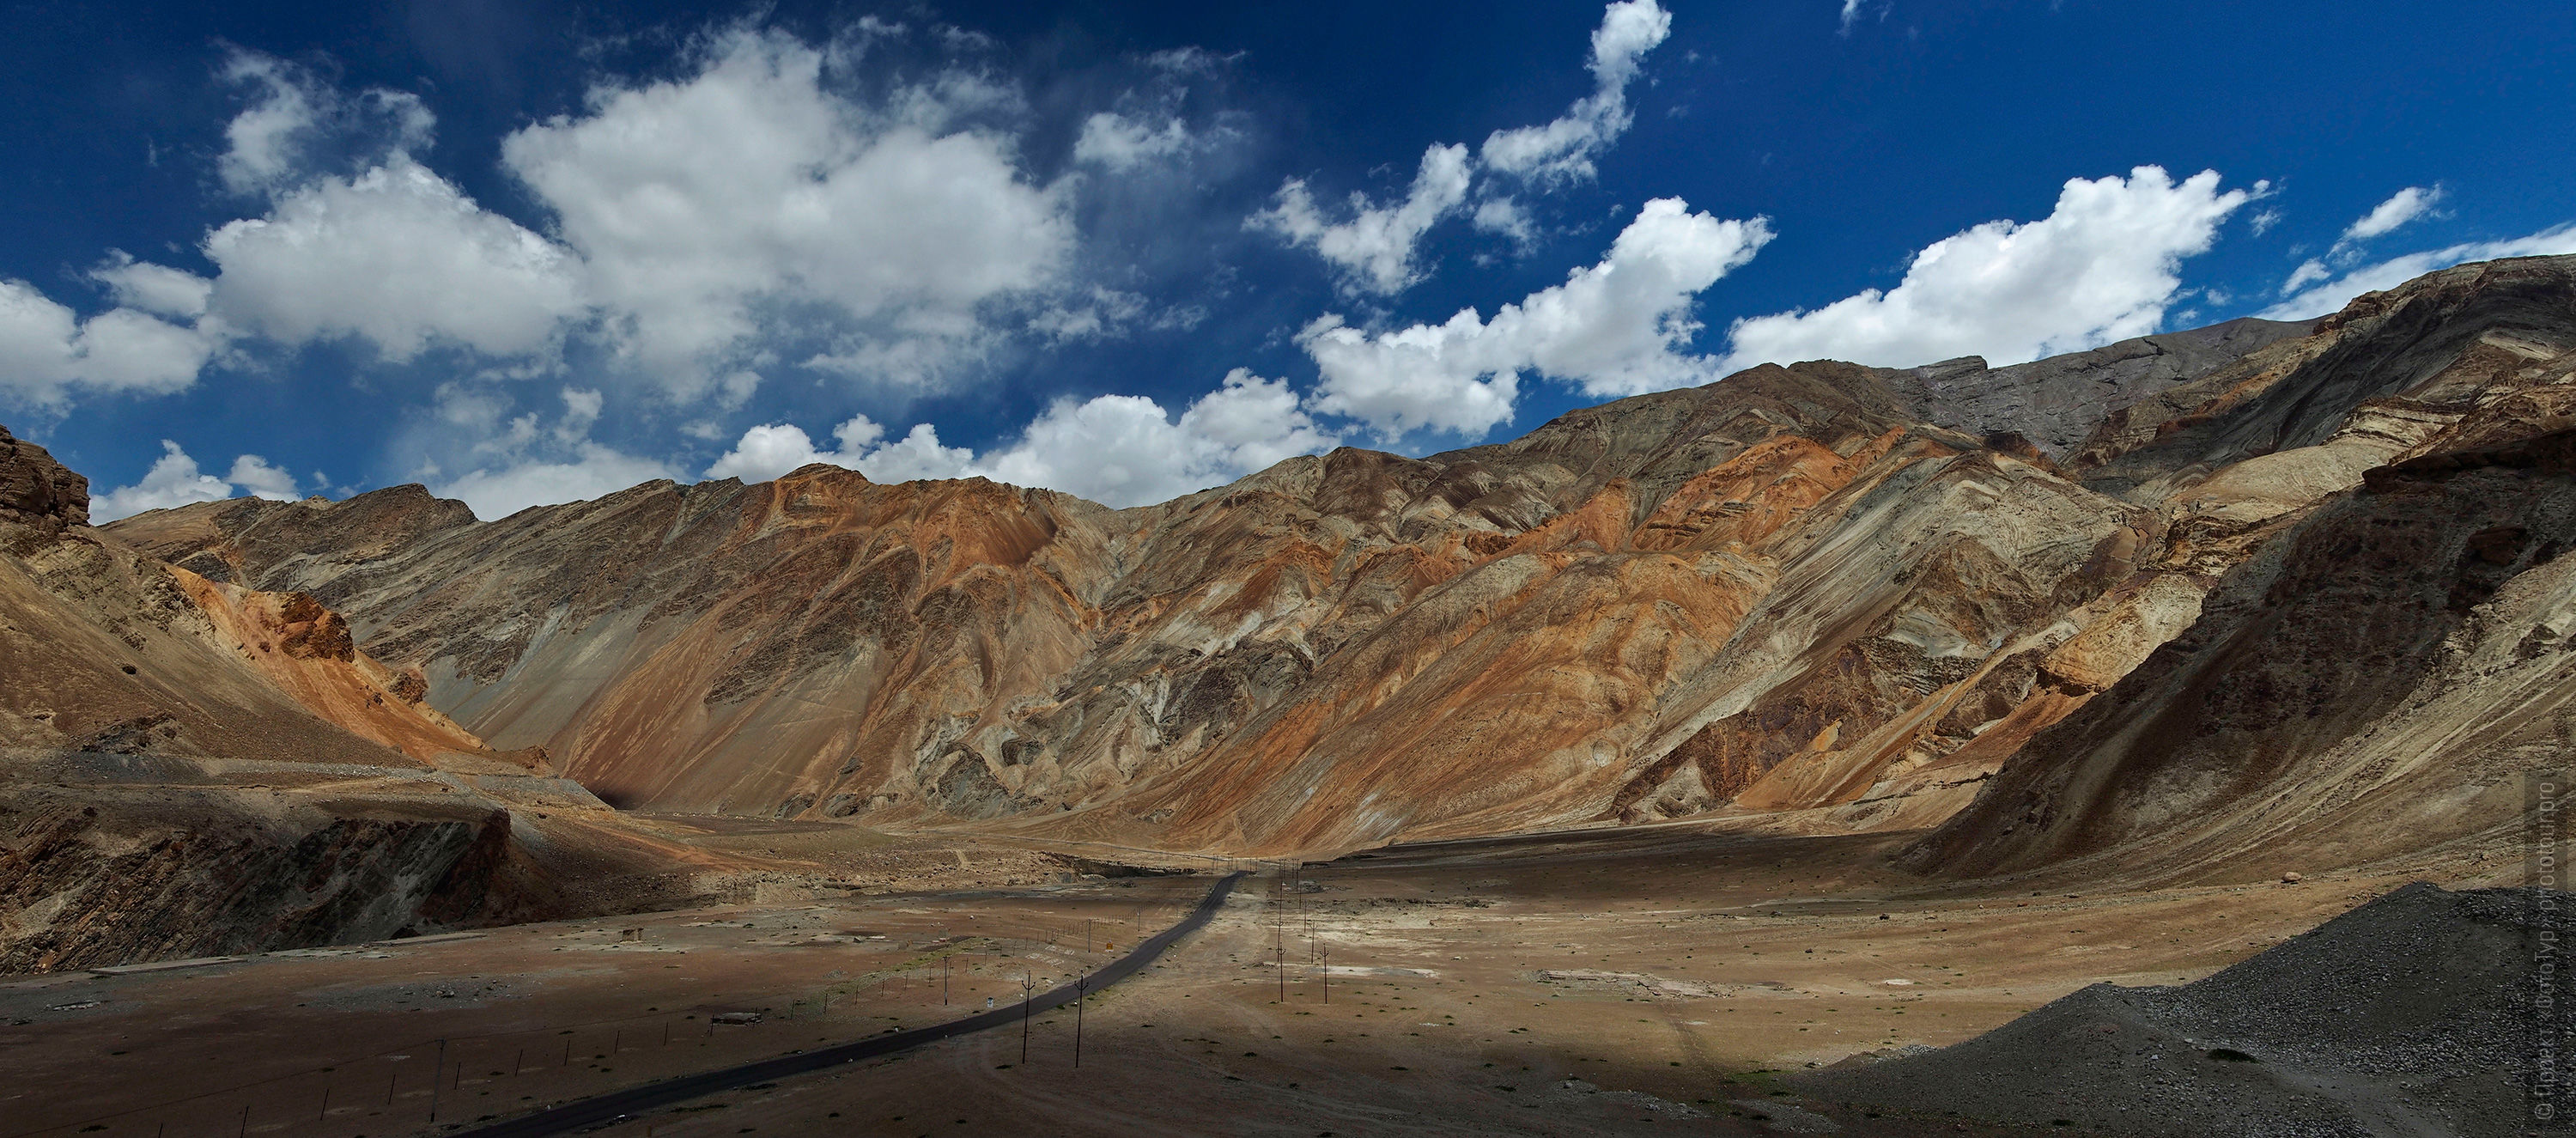 Gorge Da Han. Ladakh women tour, August 31 - September 14, 2019.